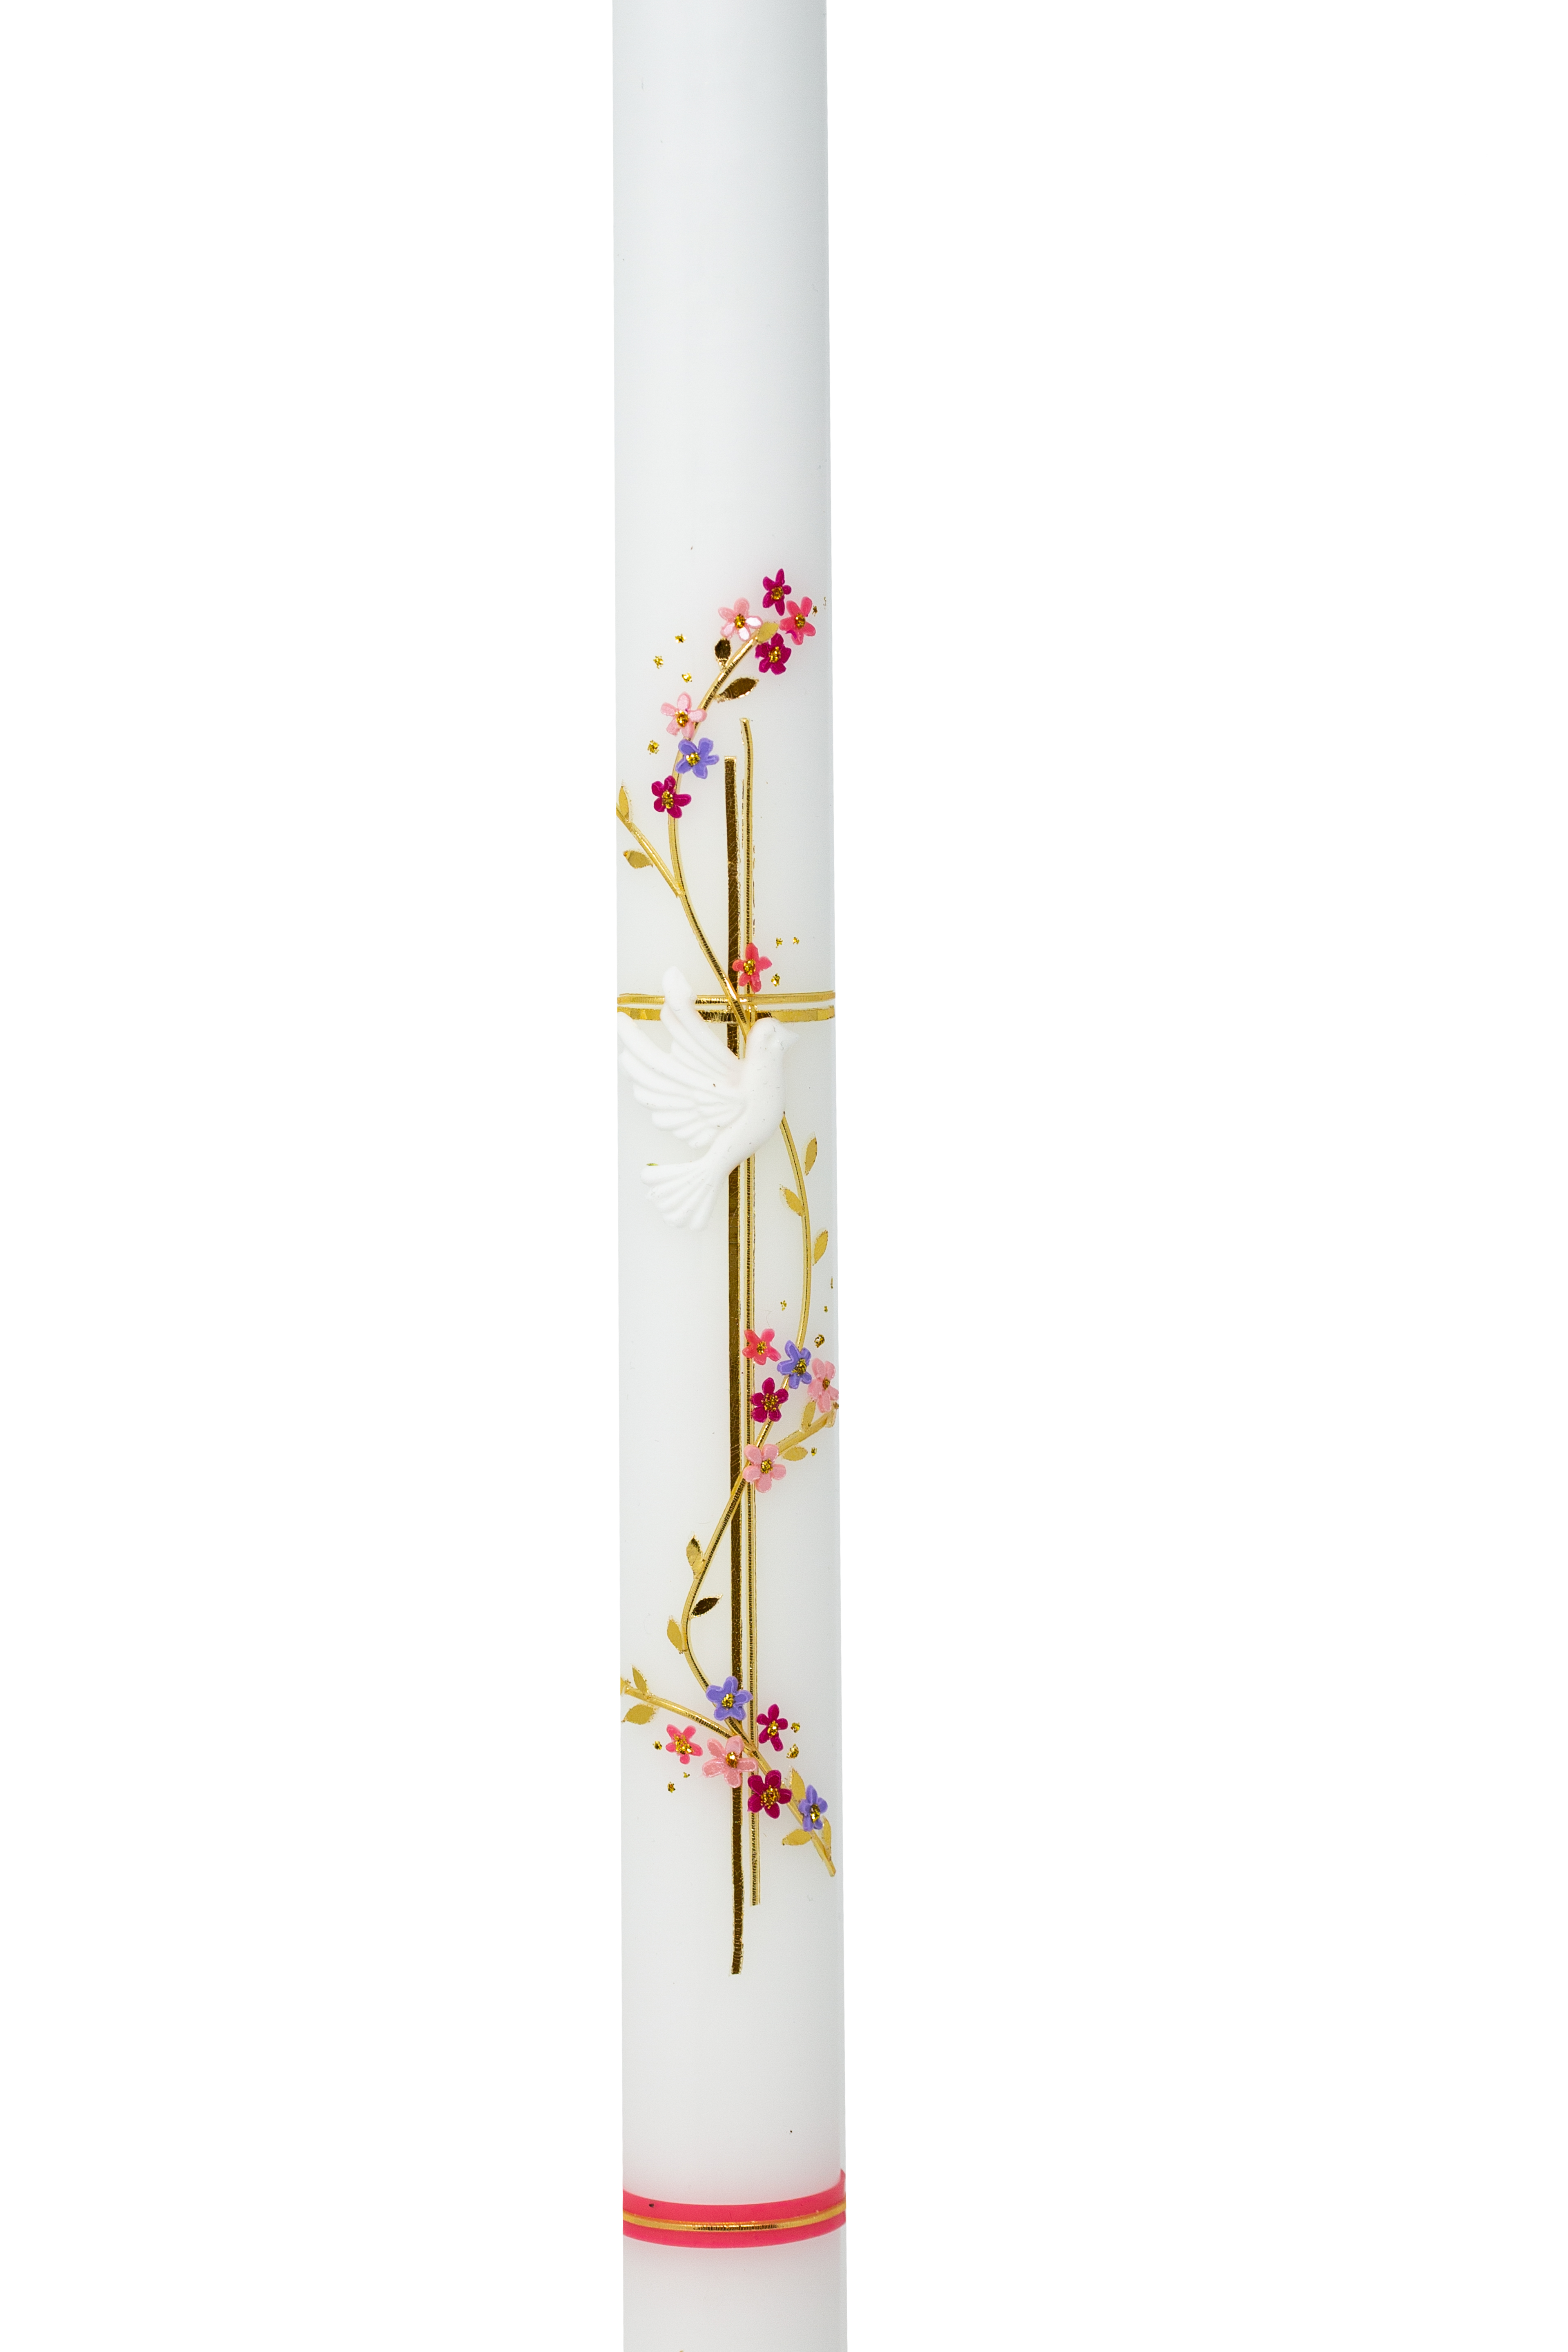 Taufkerze Blumenranke Taube Kreuz rosa 50x3cm 